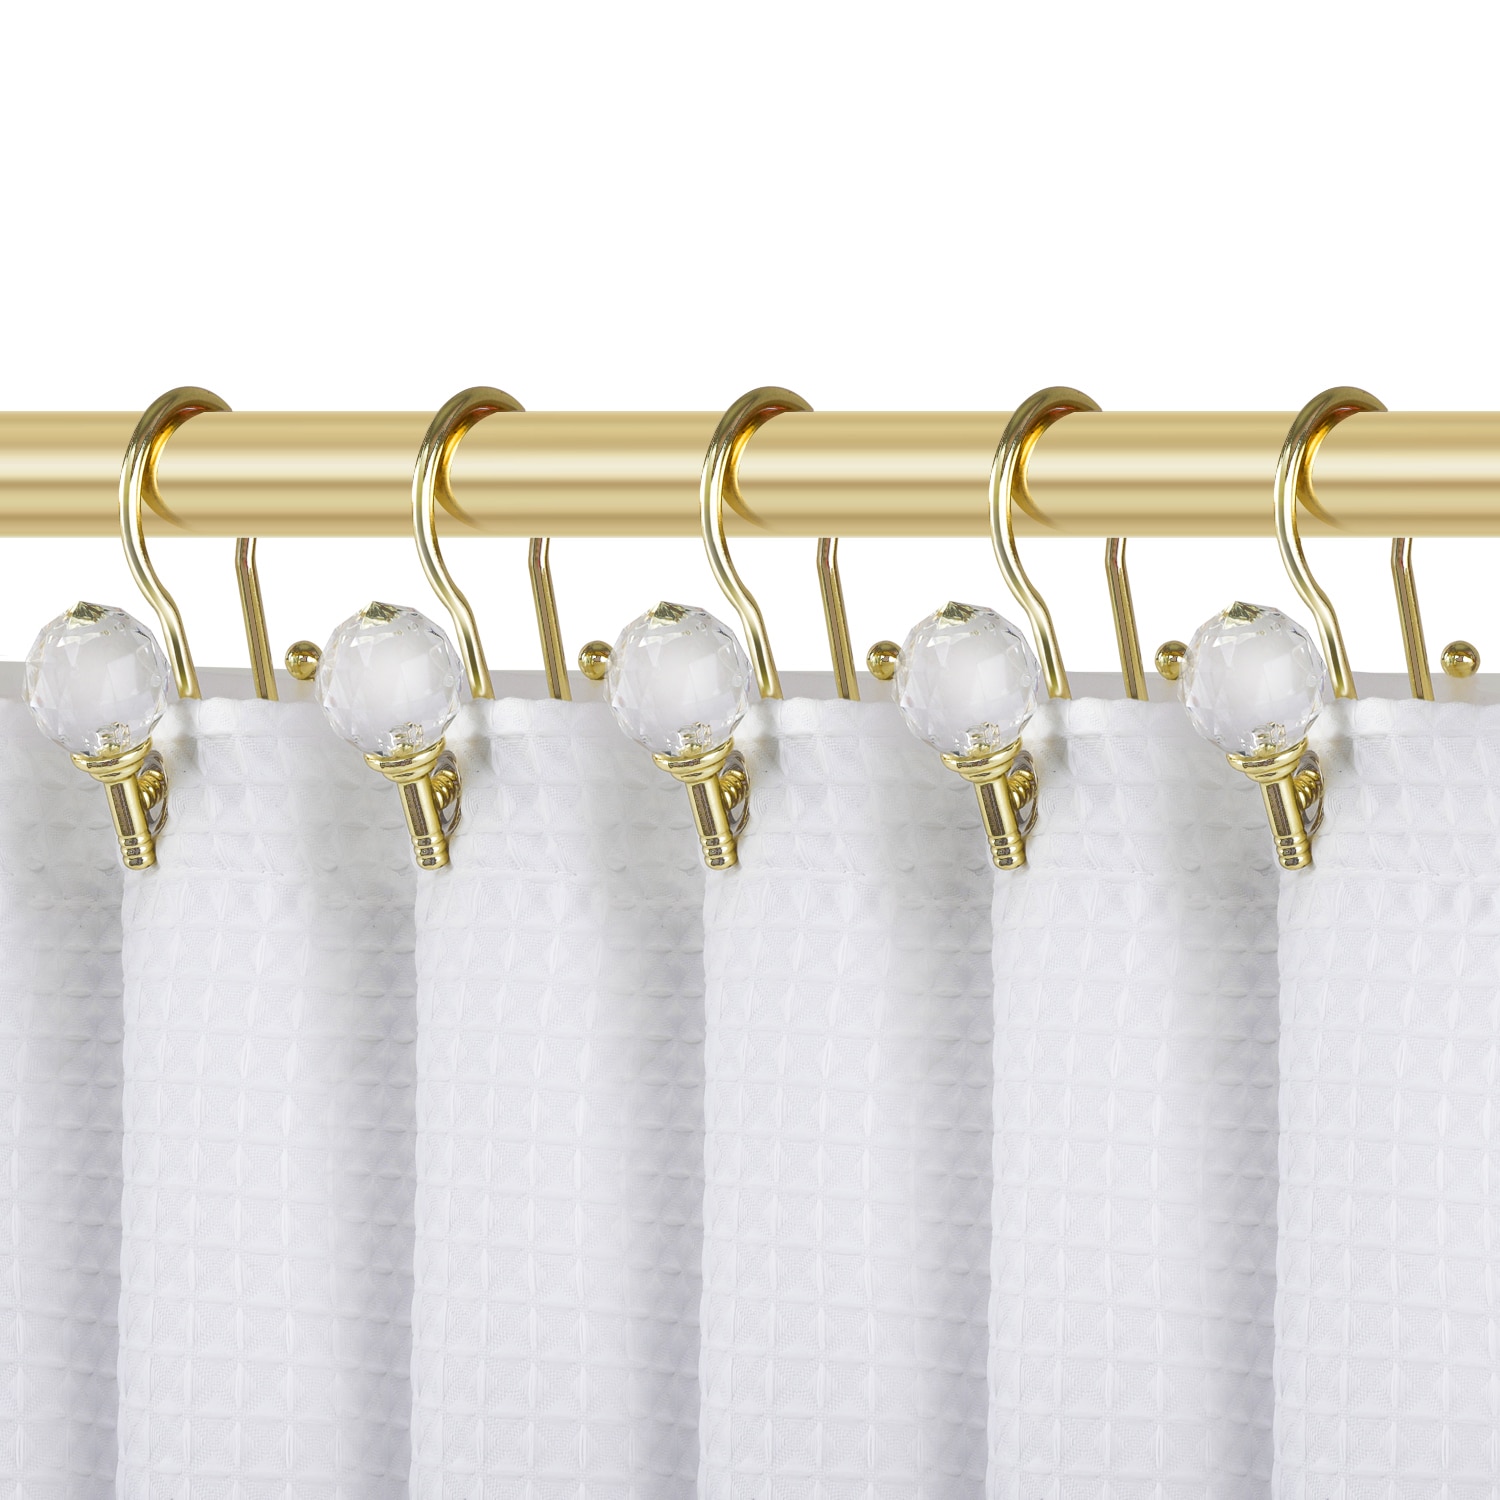 acdanc Gold Shower Curtain Hooks Rings, 12 Decorative Shower Curtain Hooks, Metal Rustproof Shower Rings for Bathroom 